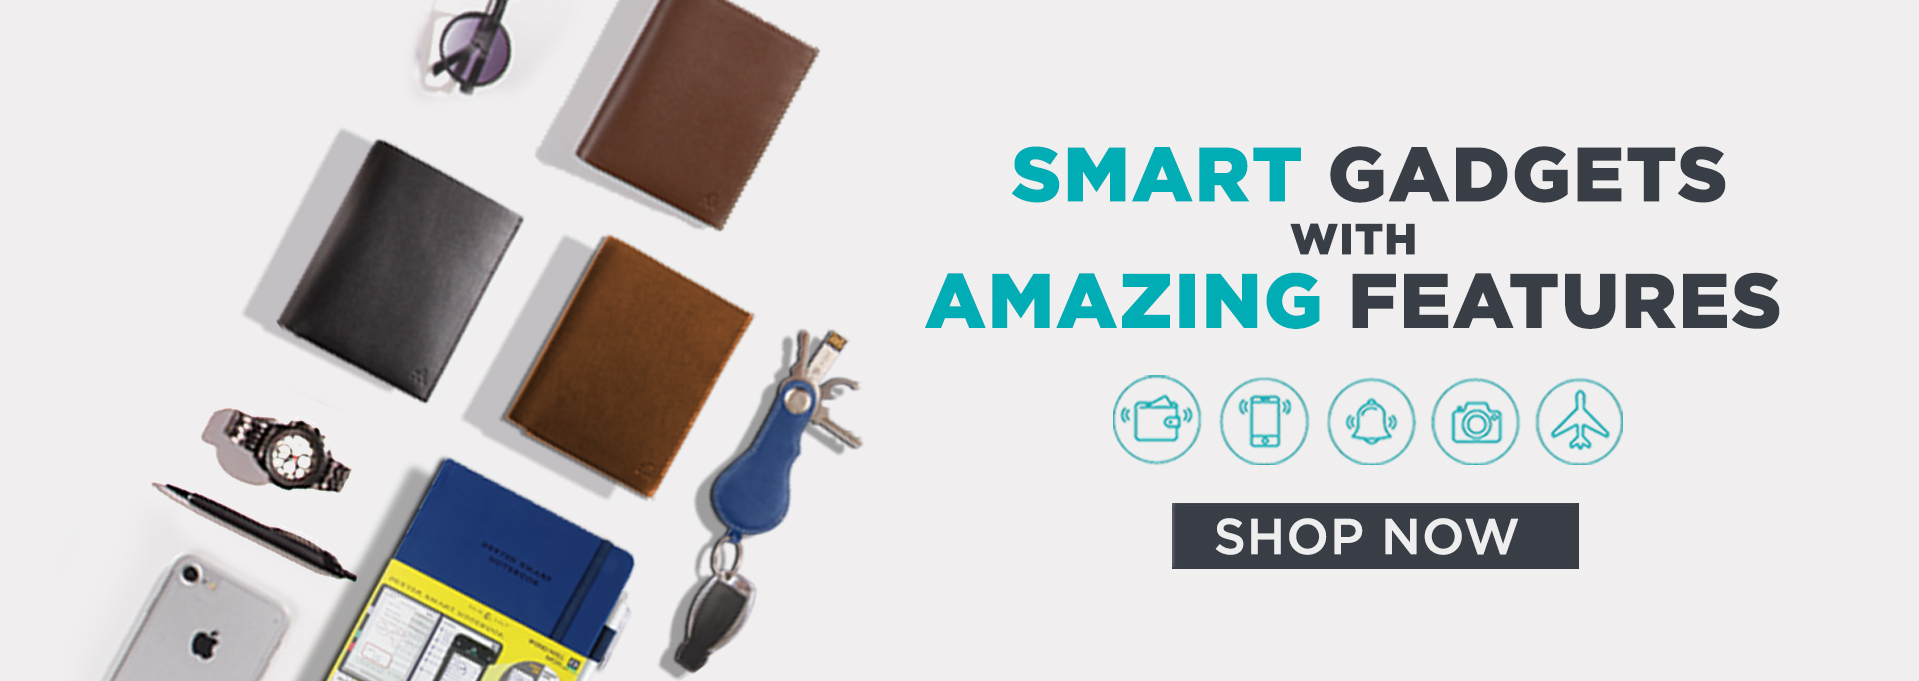 Desktop Smart Gadgets Website Poster